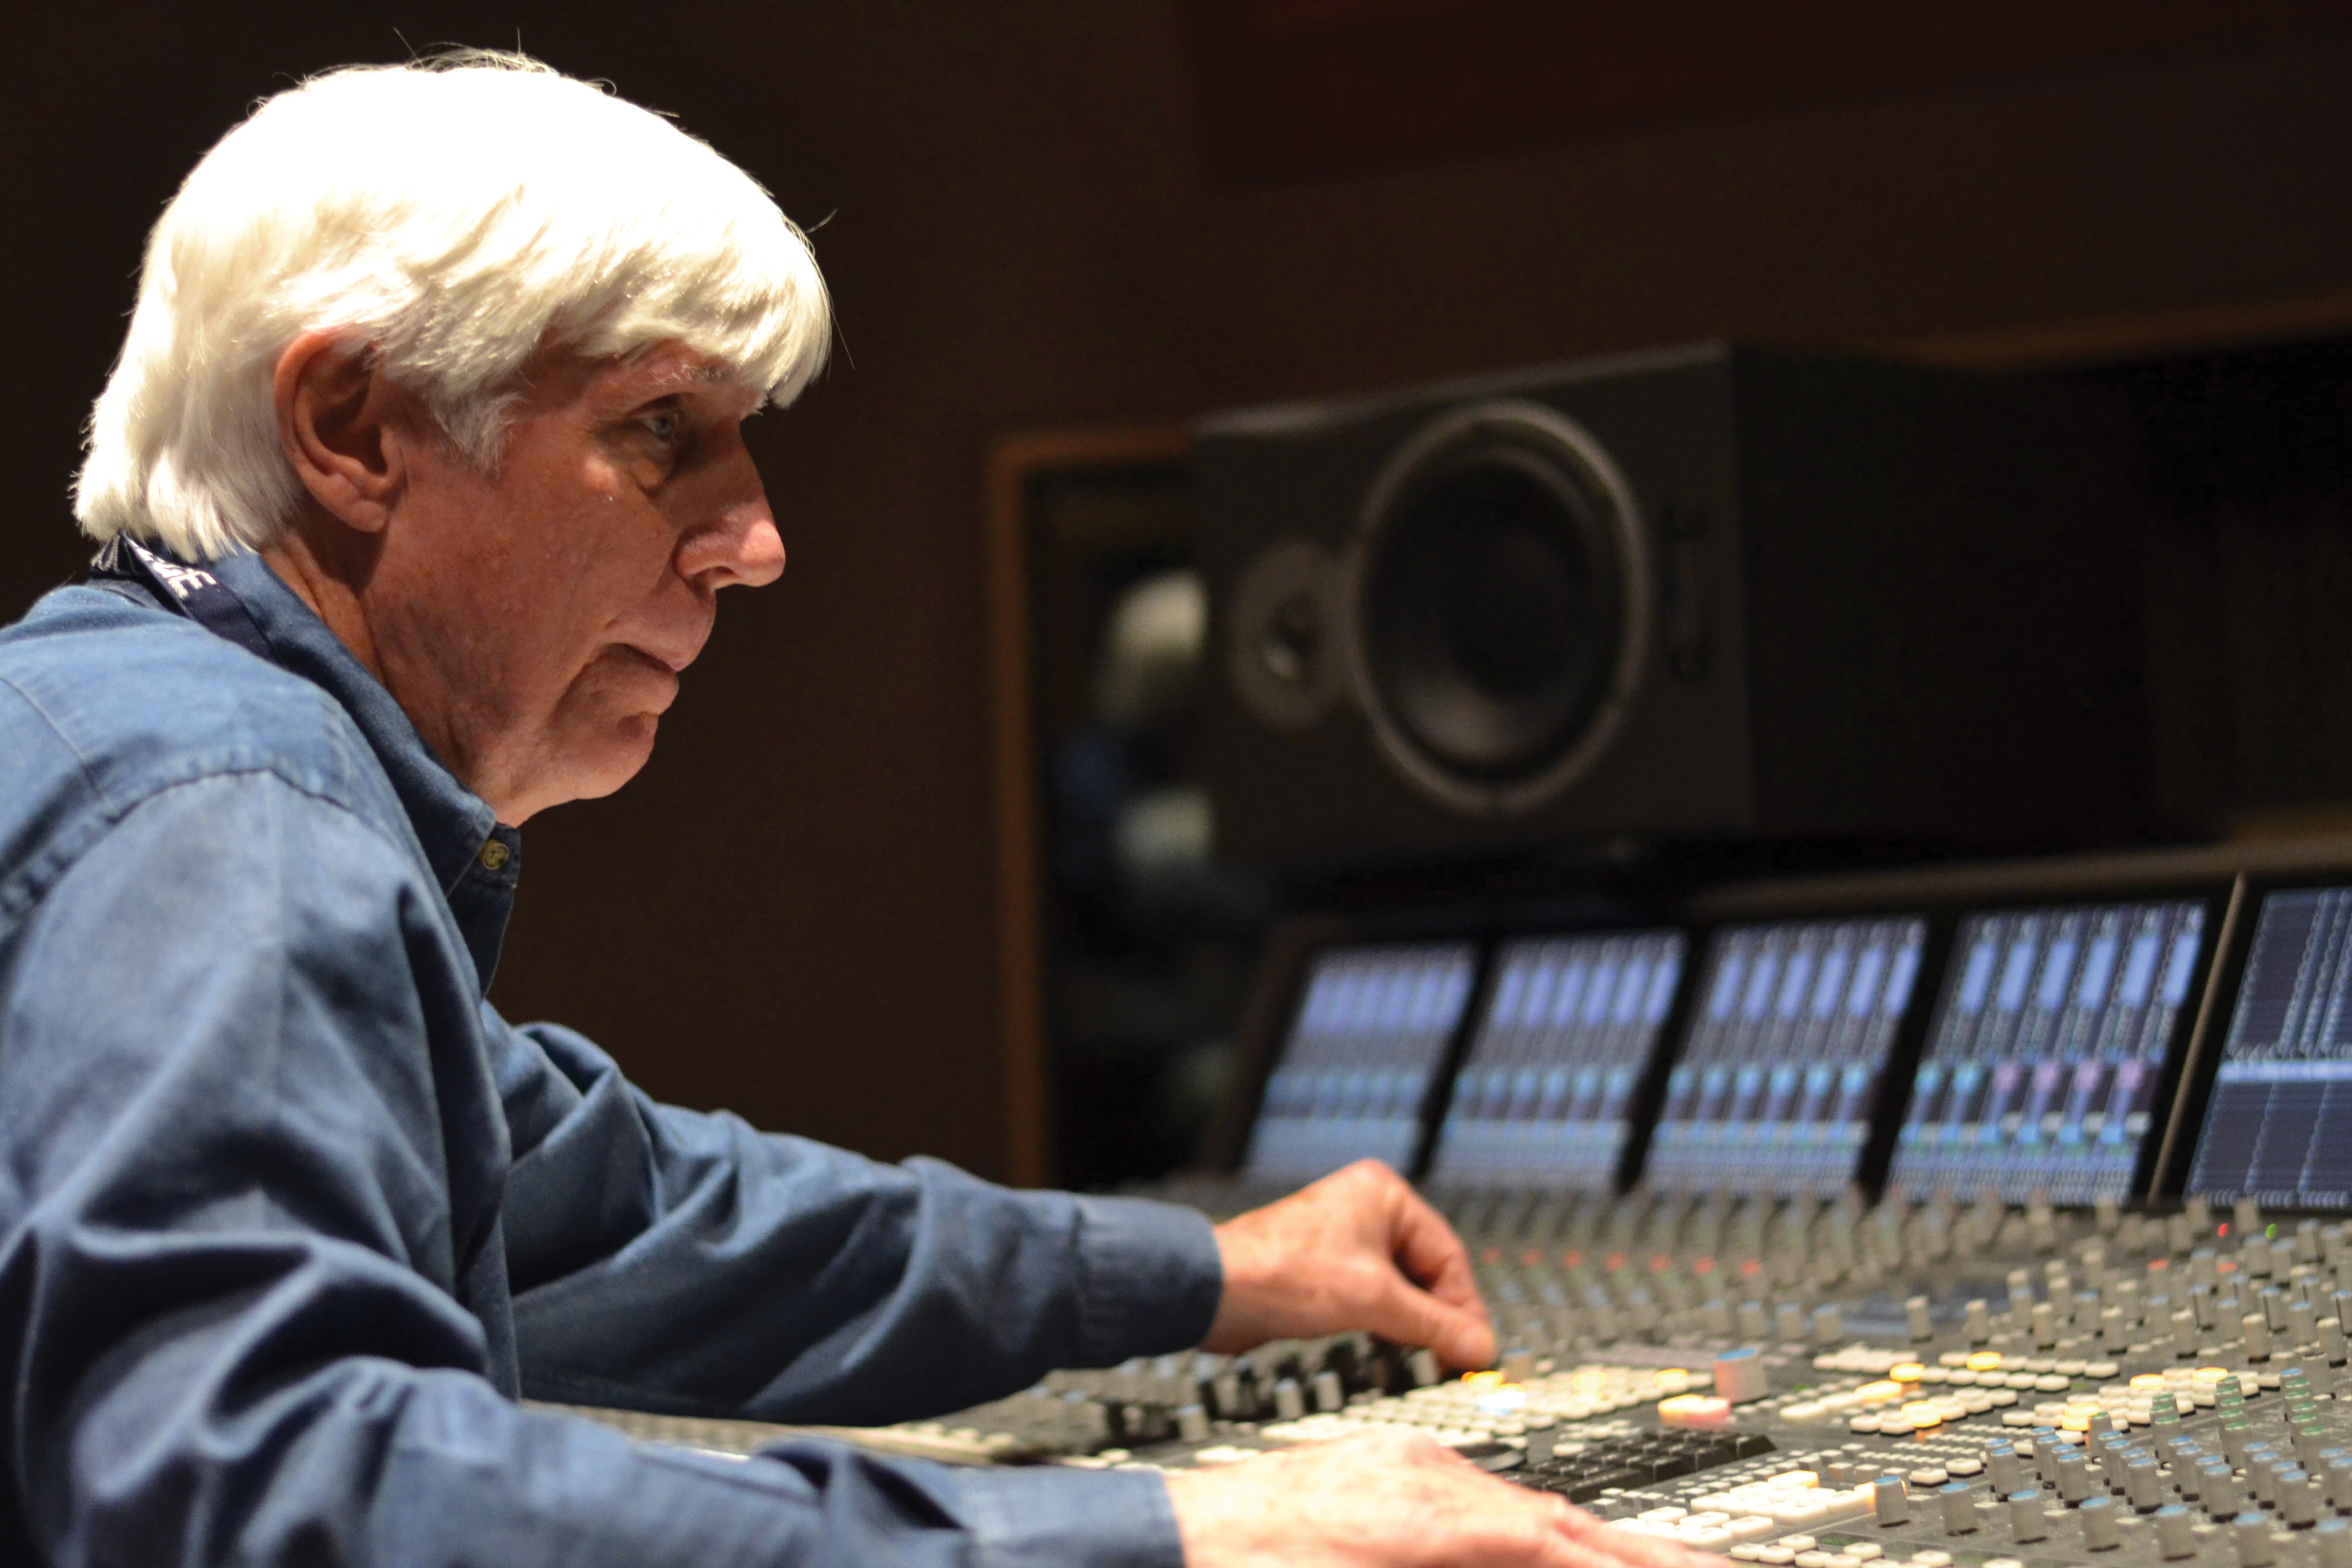 Recording arts professor John Boylan keeps moving on